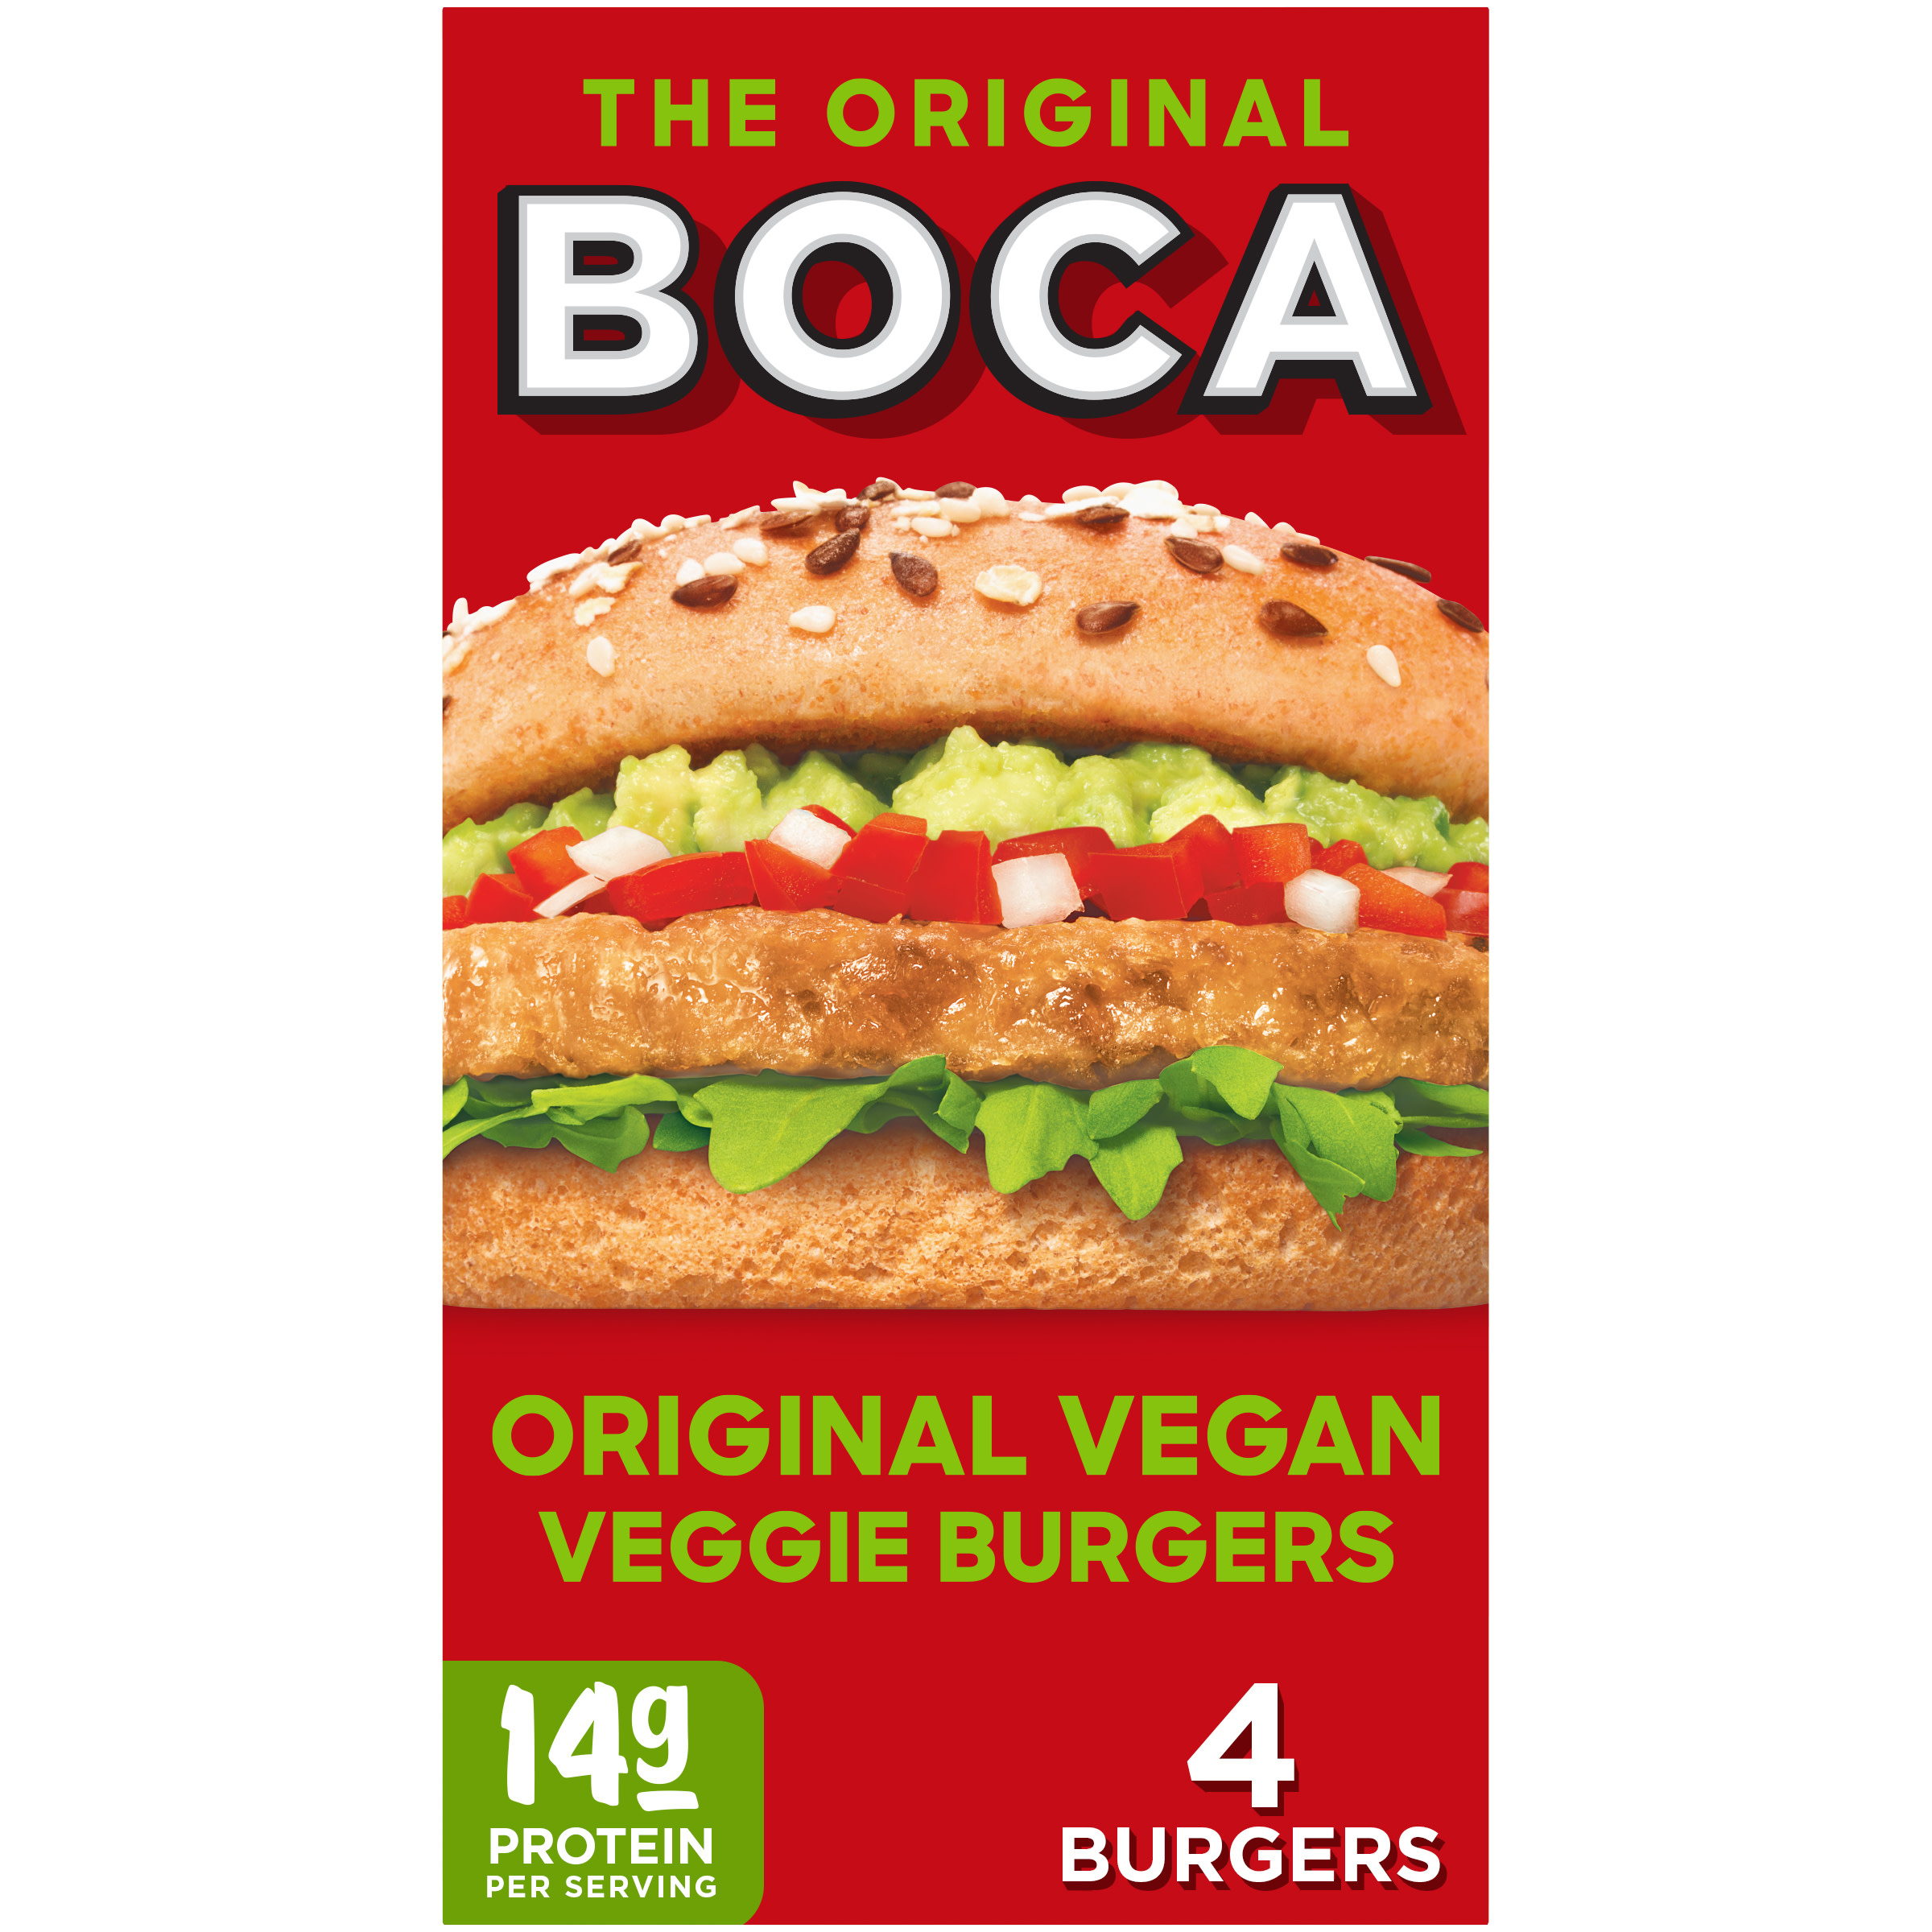 BOCA Original Vegan Veggie Burgers, 4 ct Box - image 1 of 16